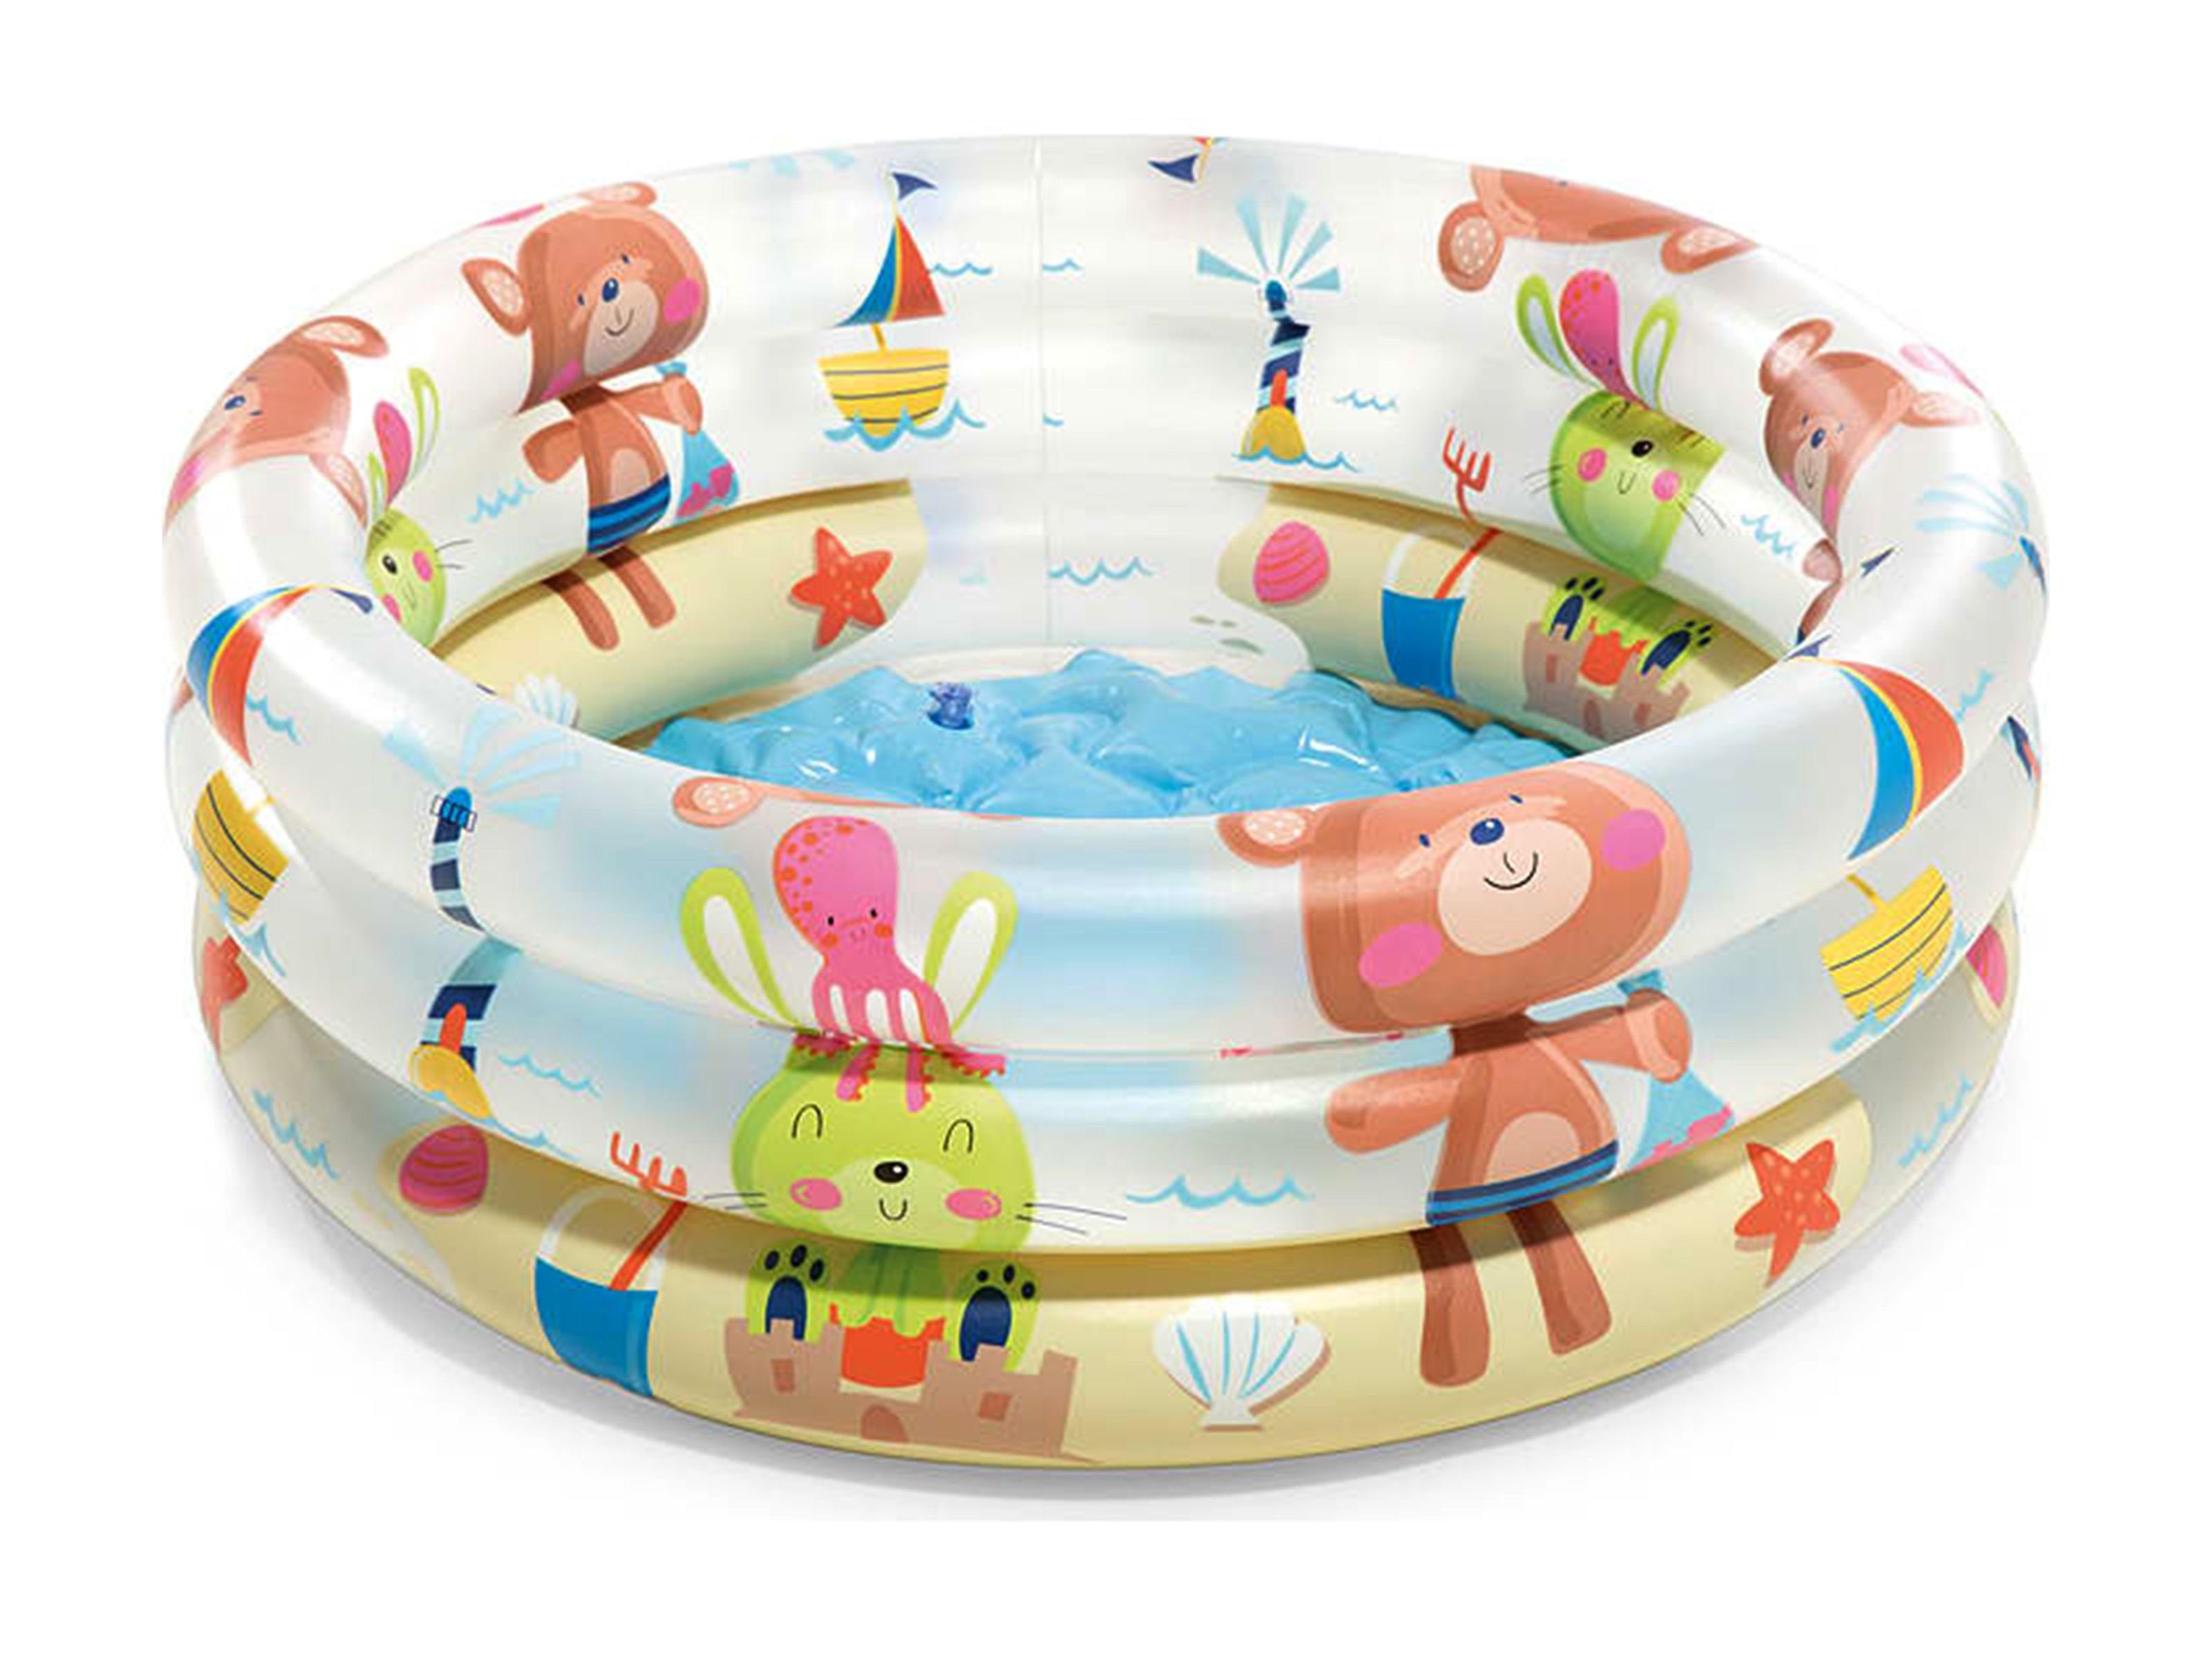 Gravidus Pool Pool Kinder Beach Buddies Baby ca. 61 x 22 cm